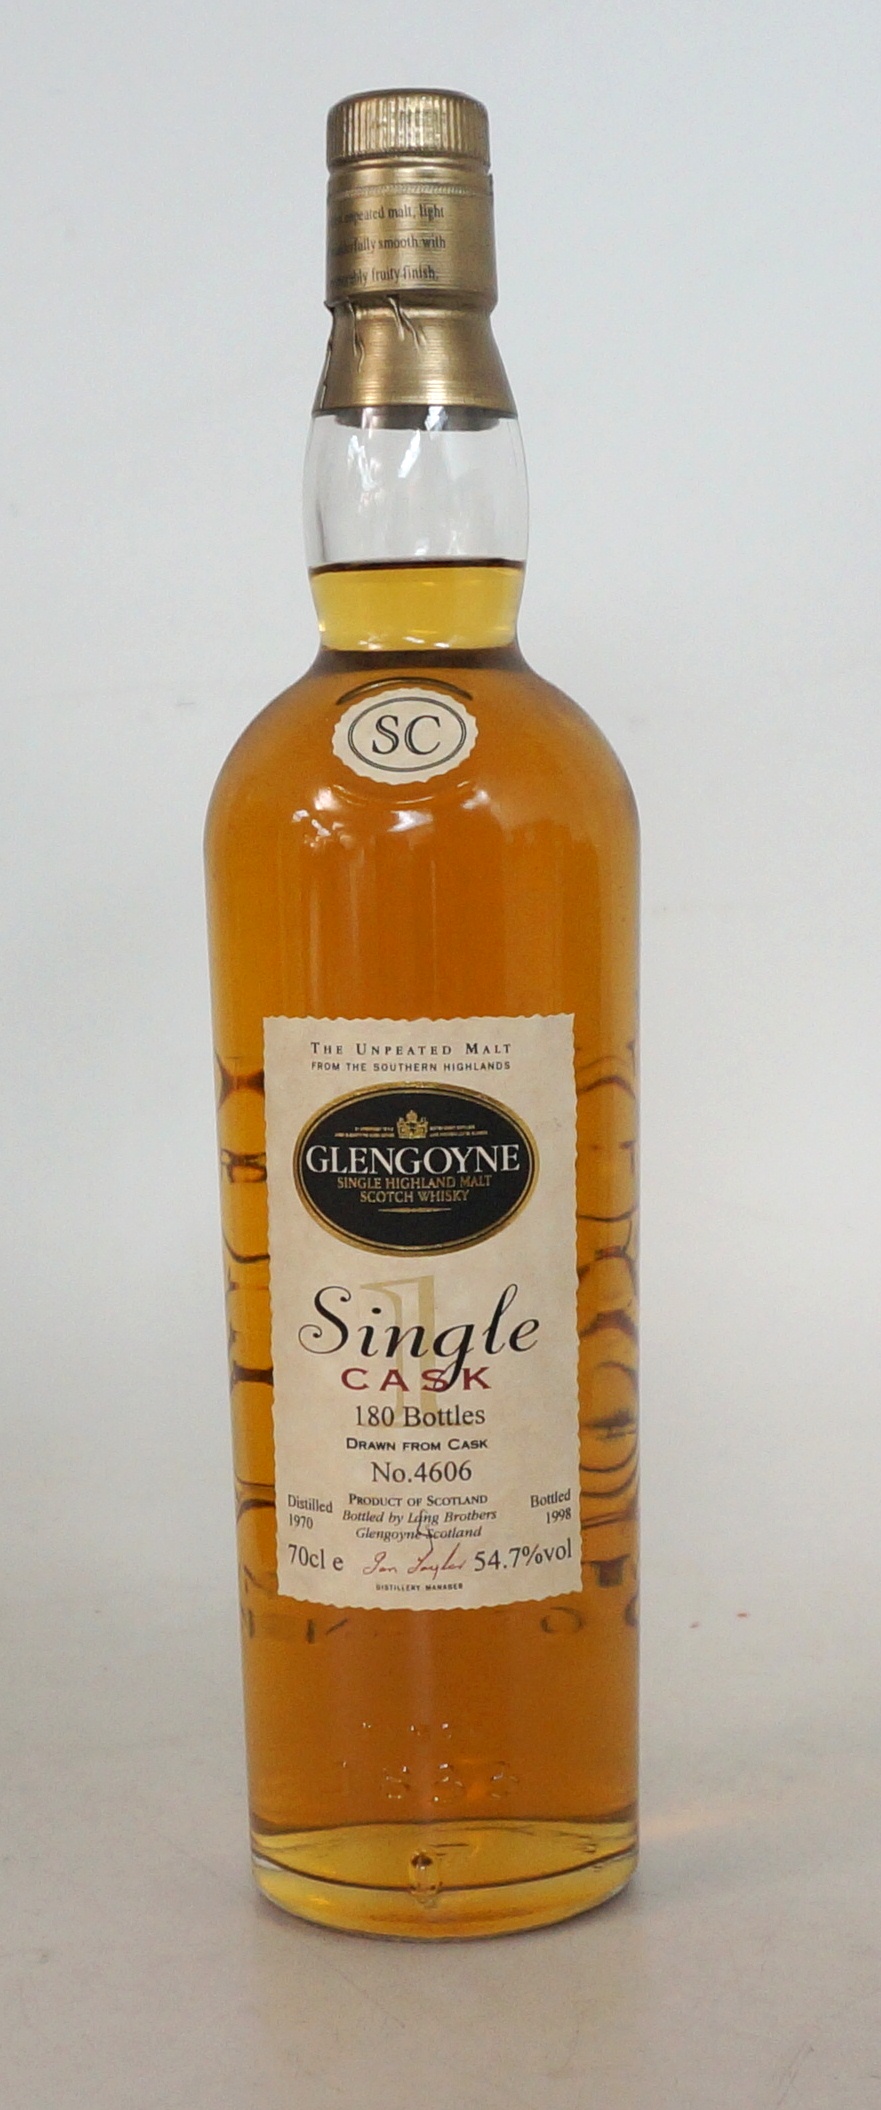 GLENGOYNE 1970 SINGLE CASK
1 bottle.  Glengoyne Single Cask 1970.  Limited Edition of 180